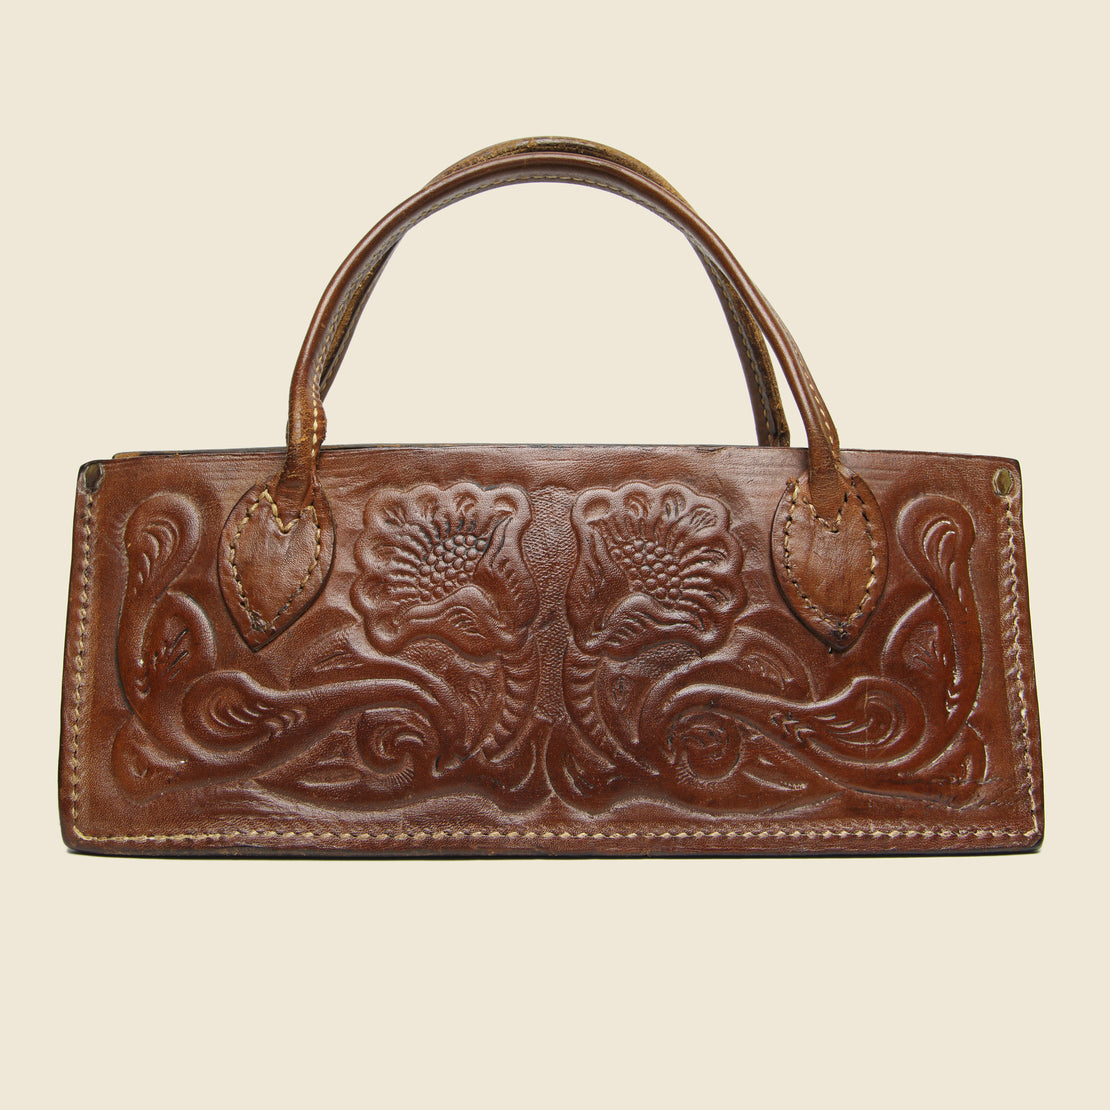 Vintage Tooled Leather Bag - Brown